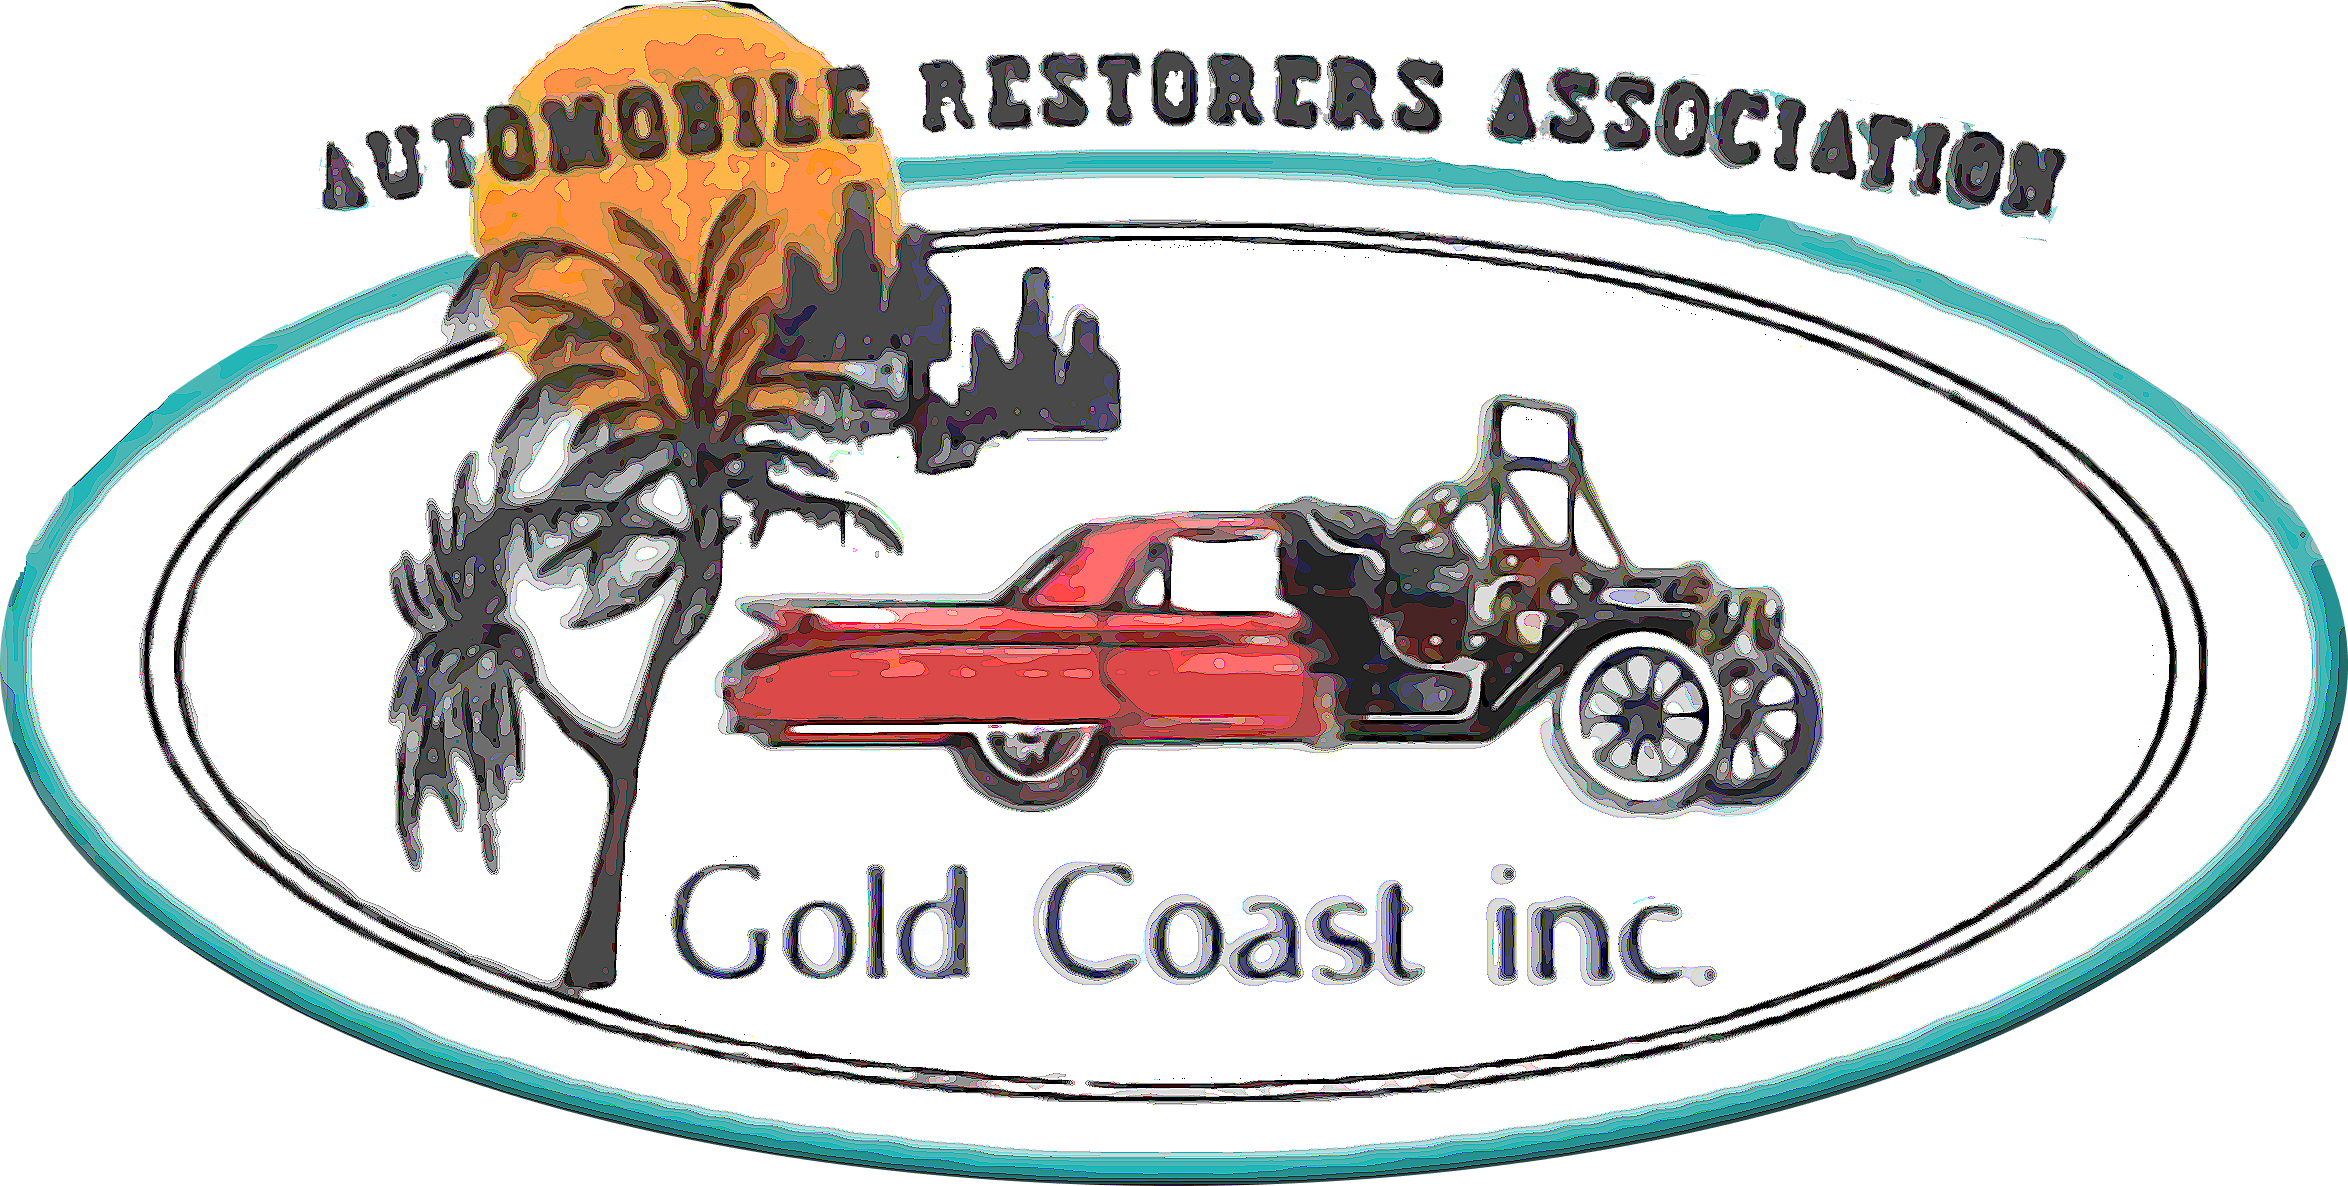 Automobile Restorers Association Gold Coast Inc.